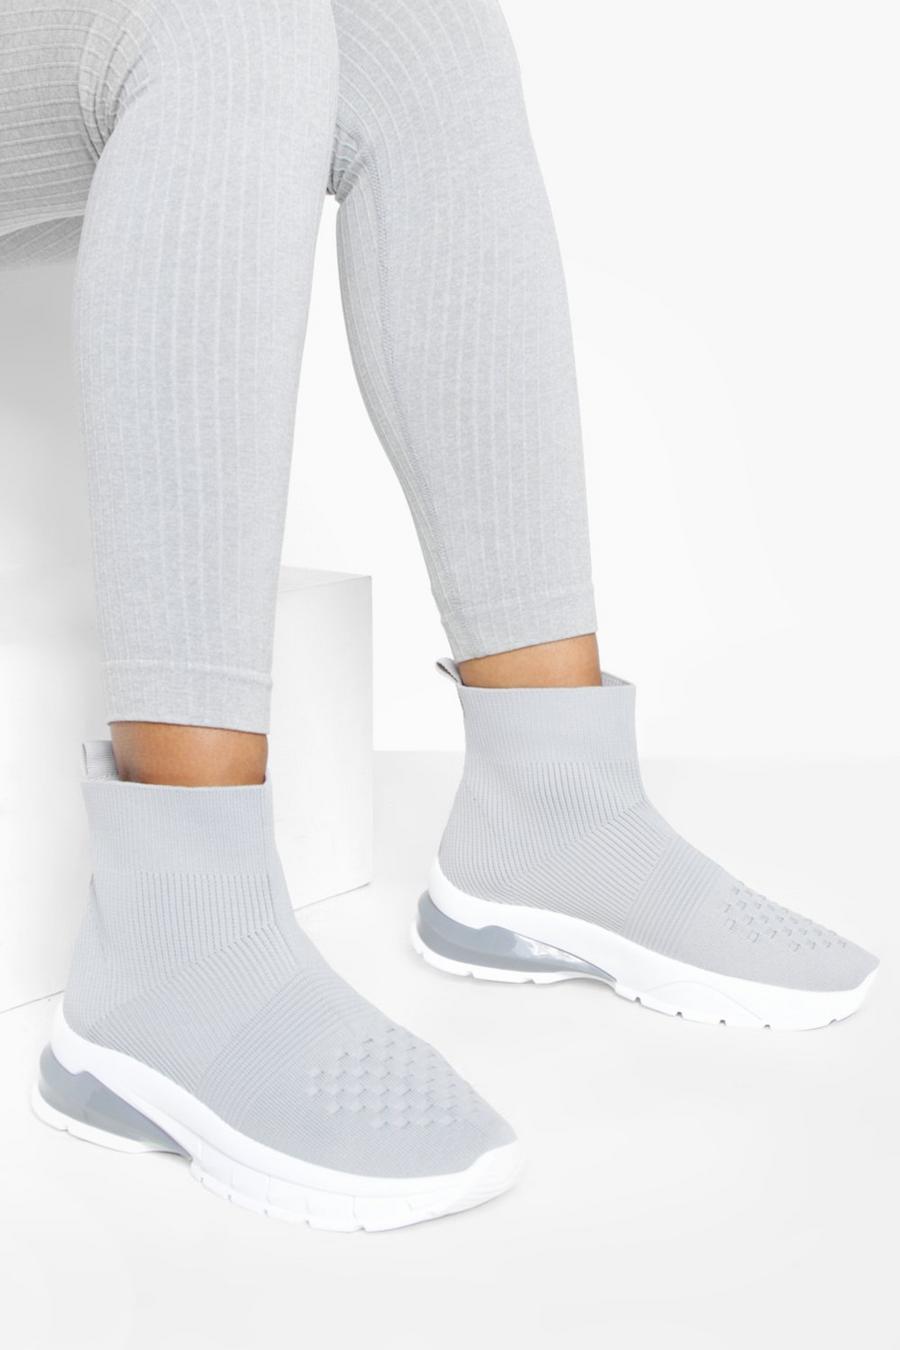 Sneaker a calza a calzata ampia con suola con bolle, Grey image number 1